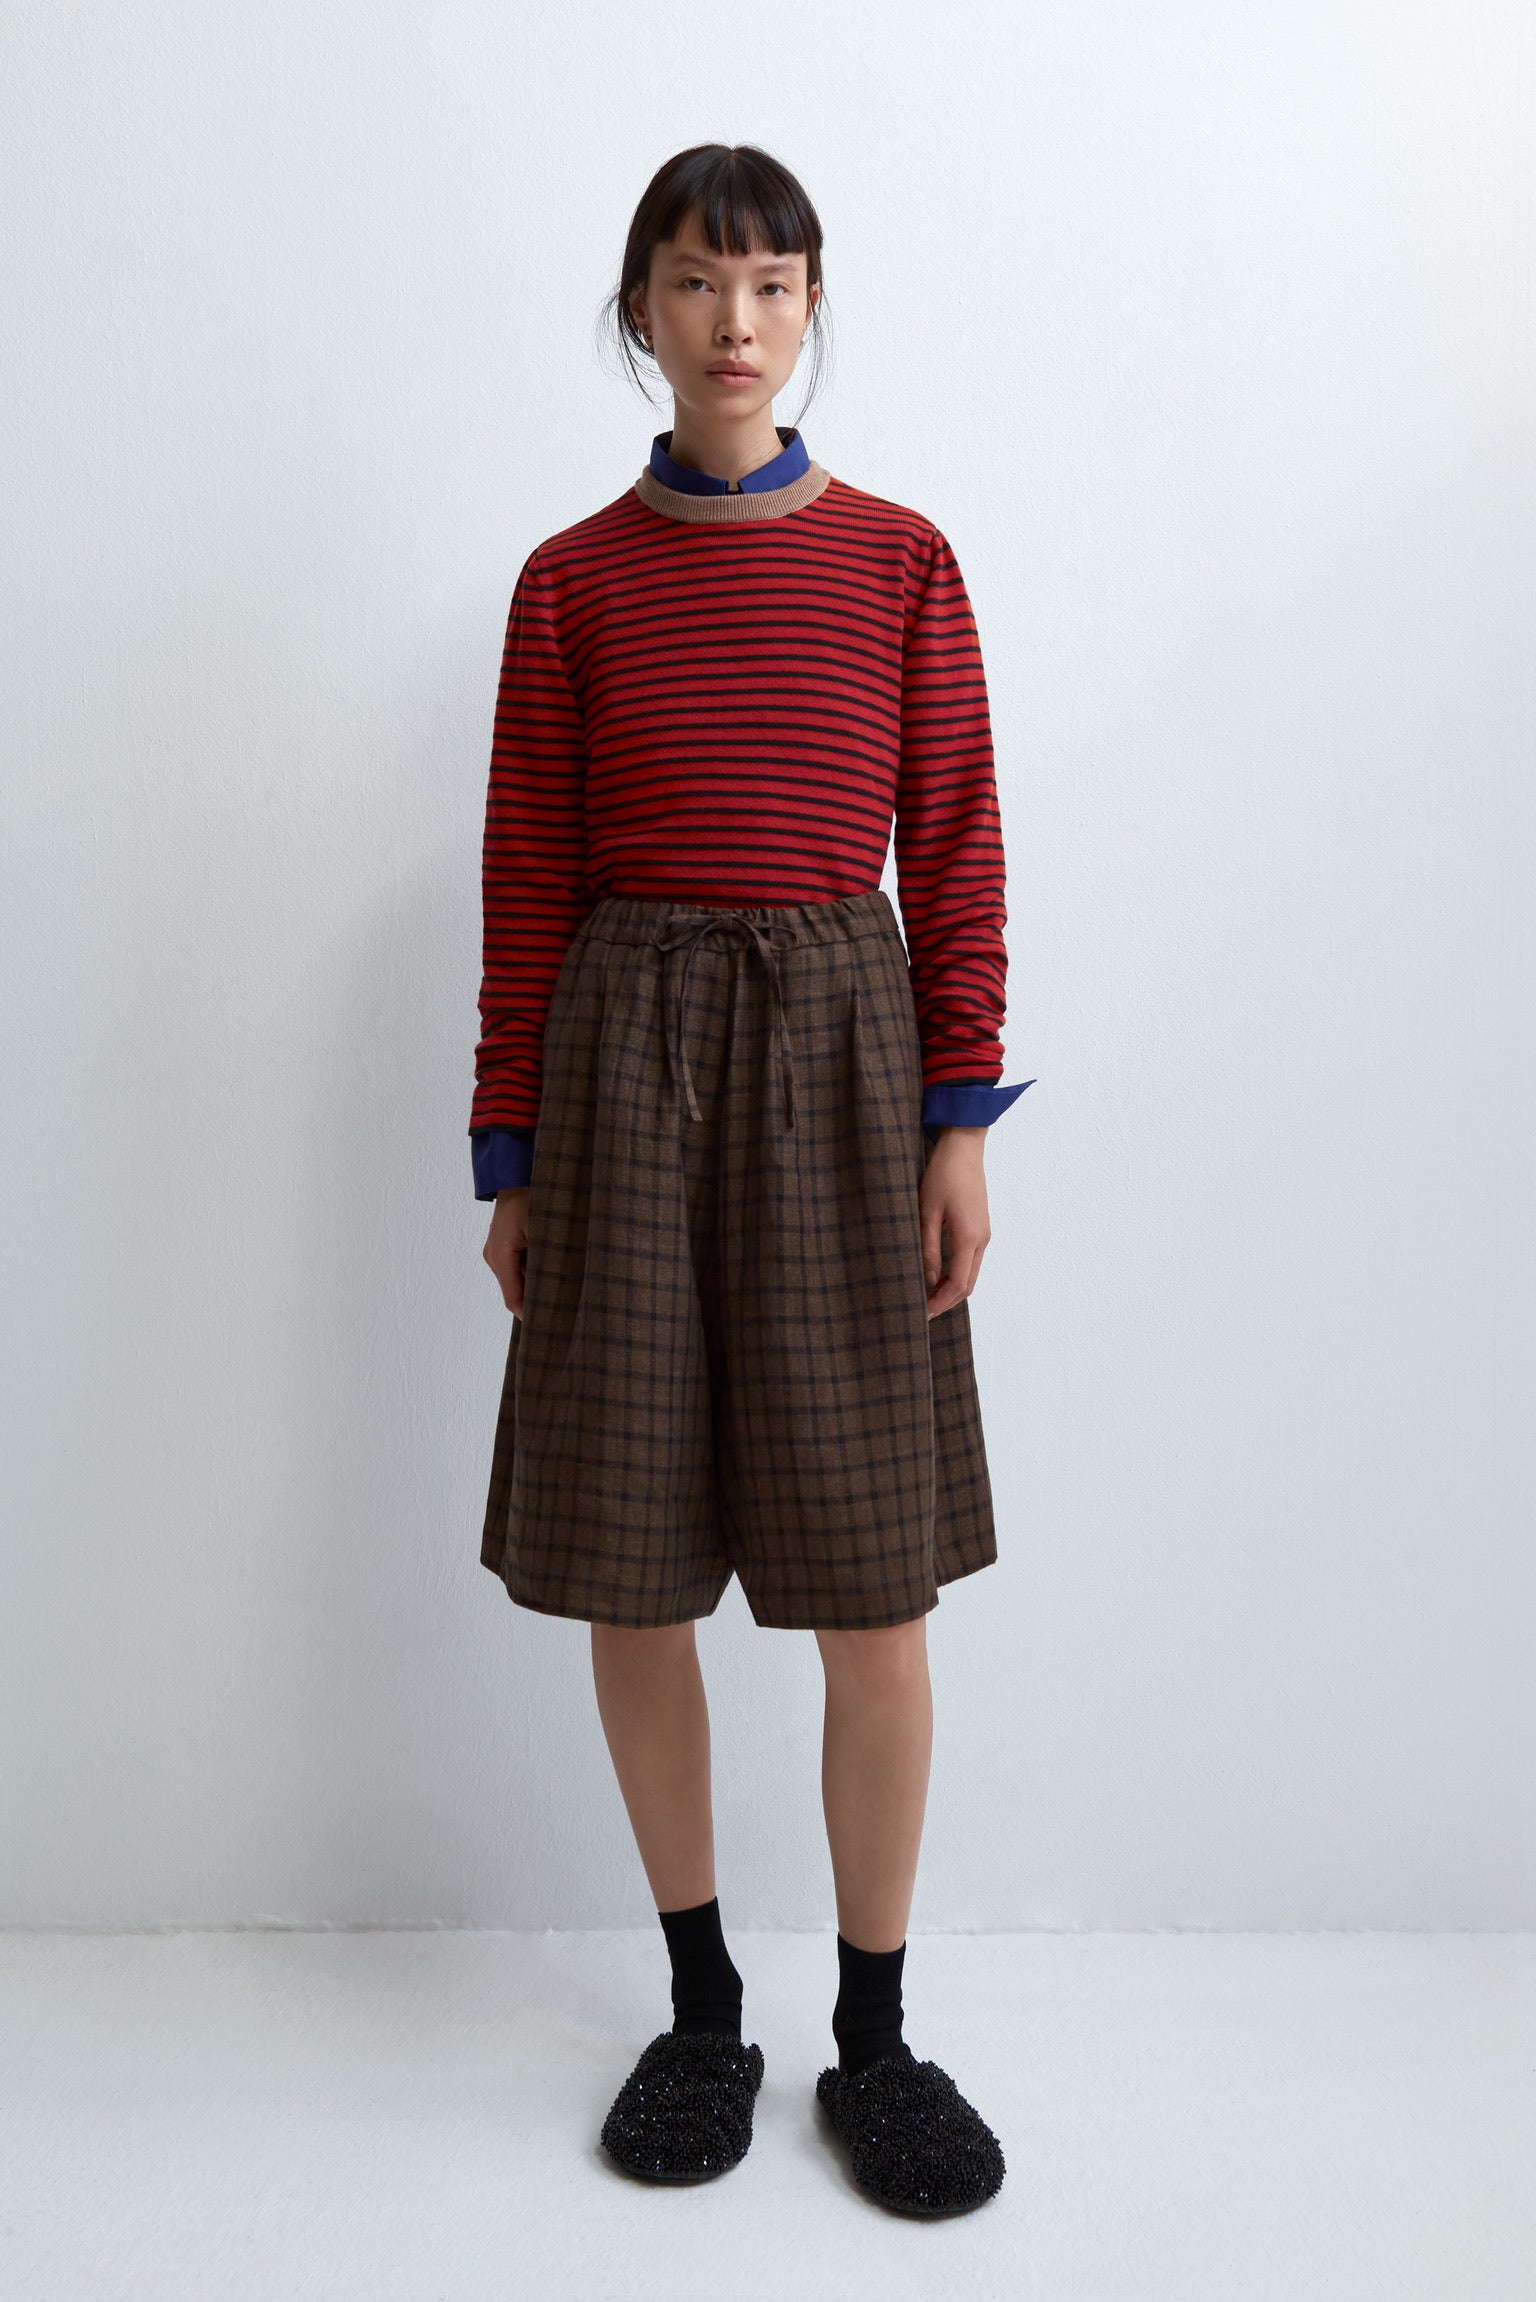 Cordera Merino Wool Striped T-Shirt / Red